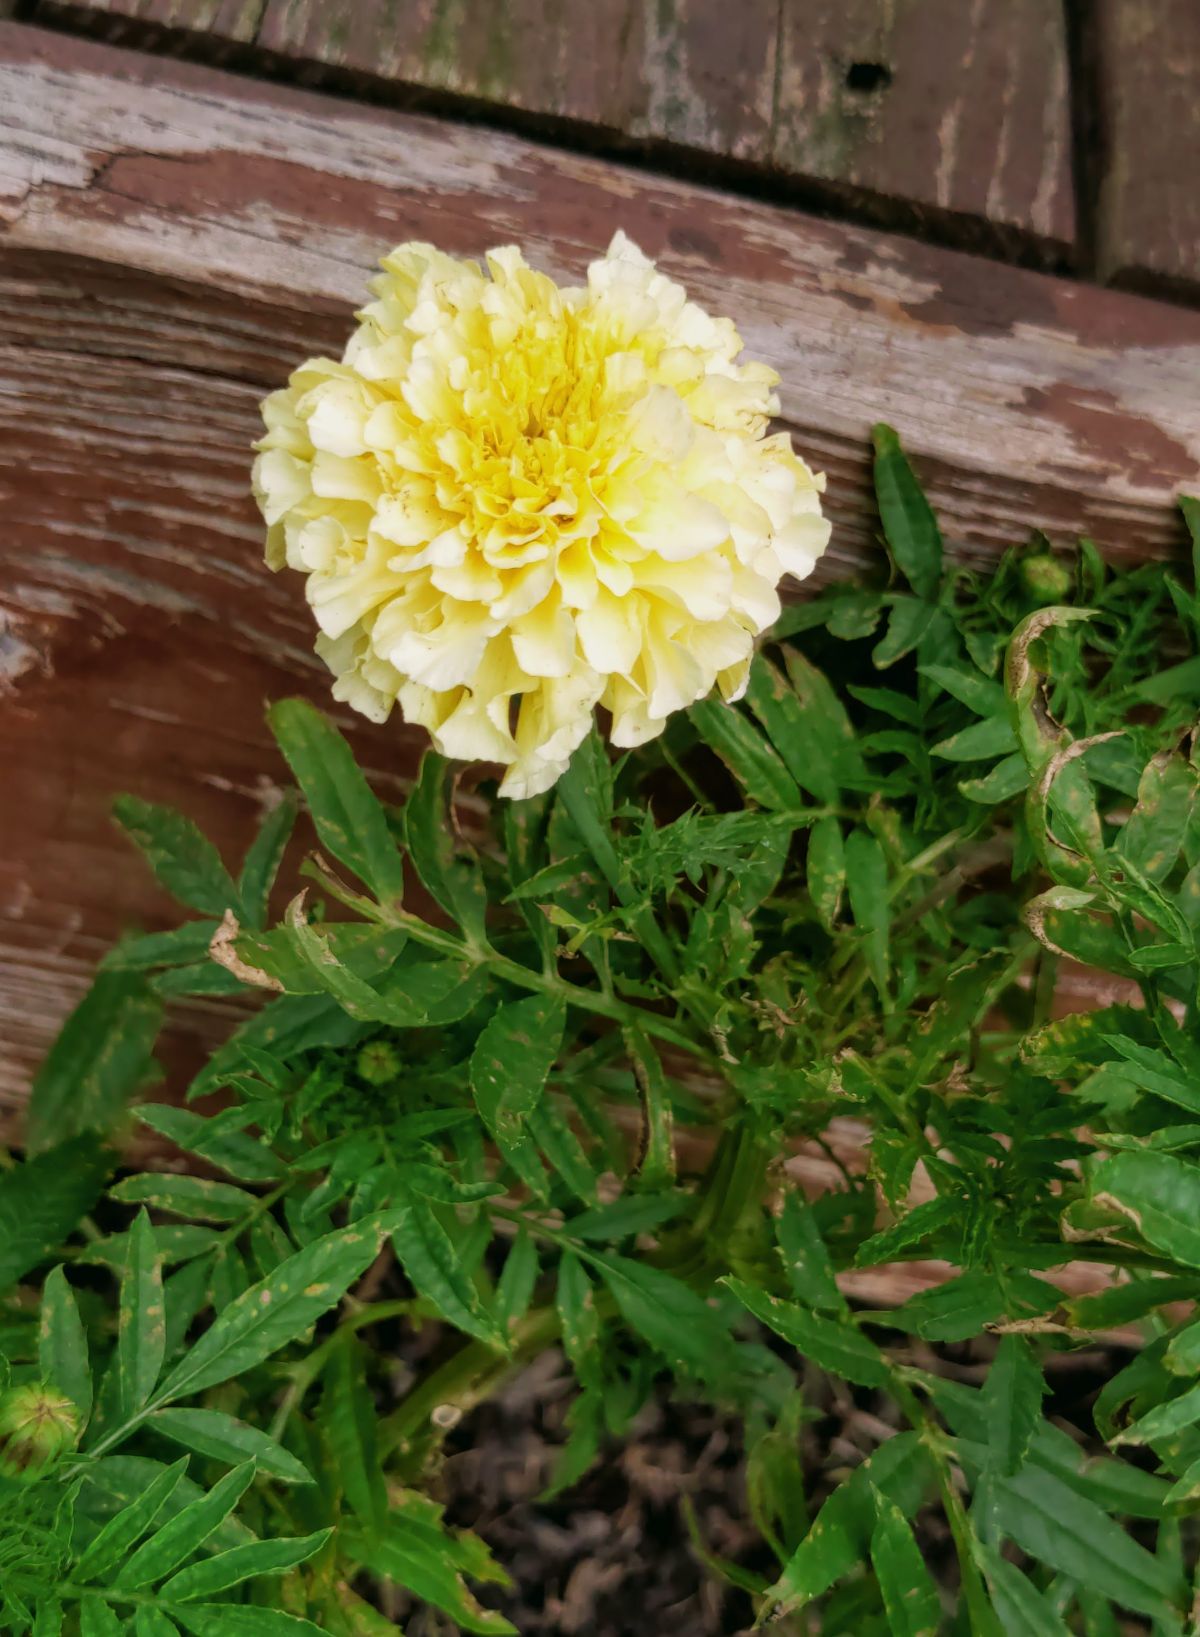 Pale yellow large blossom "vanilla" marigold